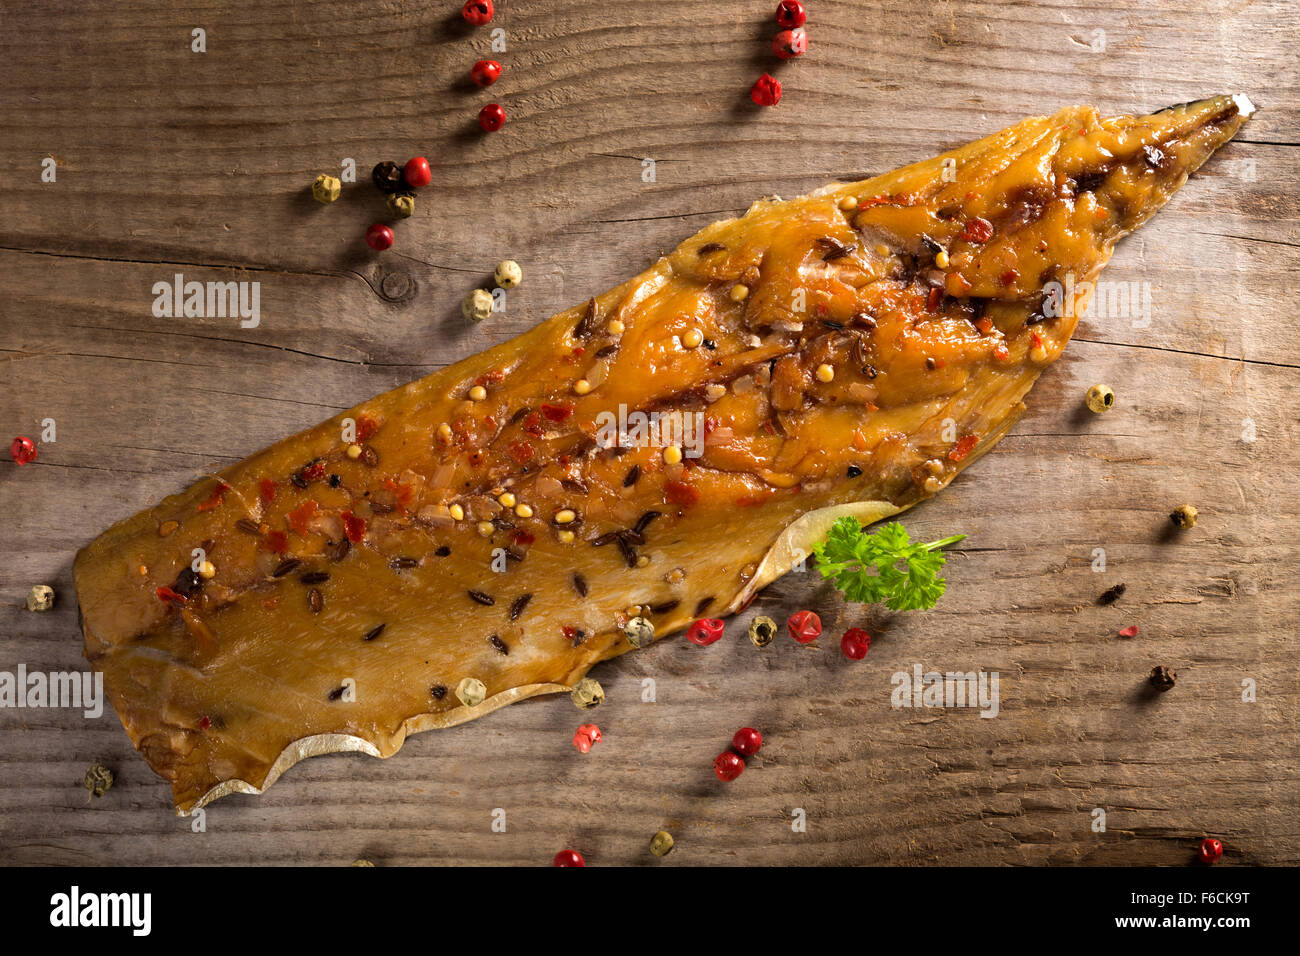 Smoked mackerel with peppercorns and mustard seeds Stock Photo